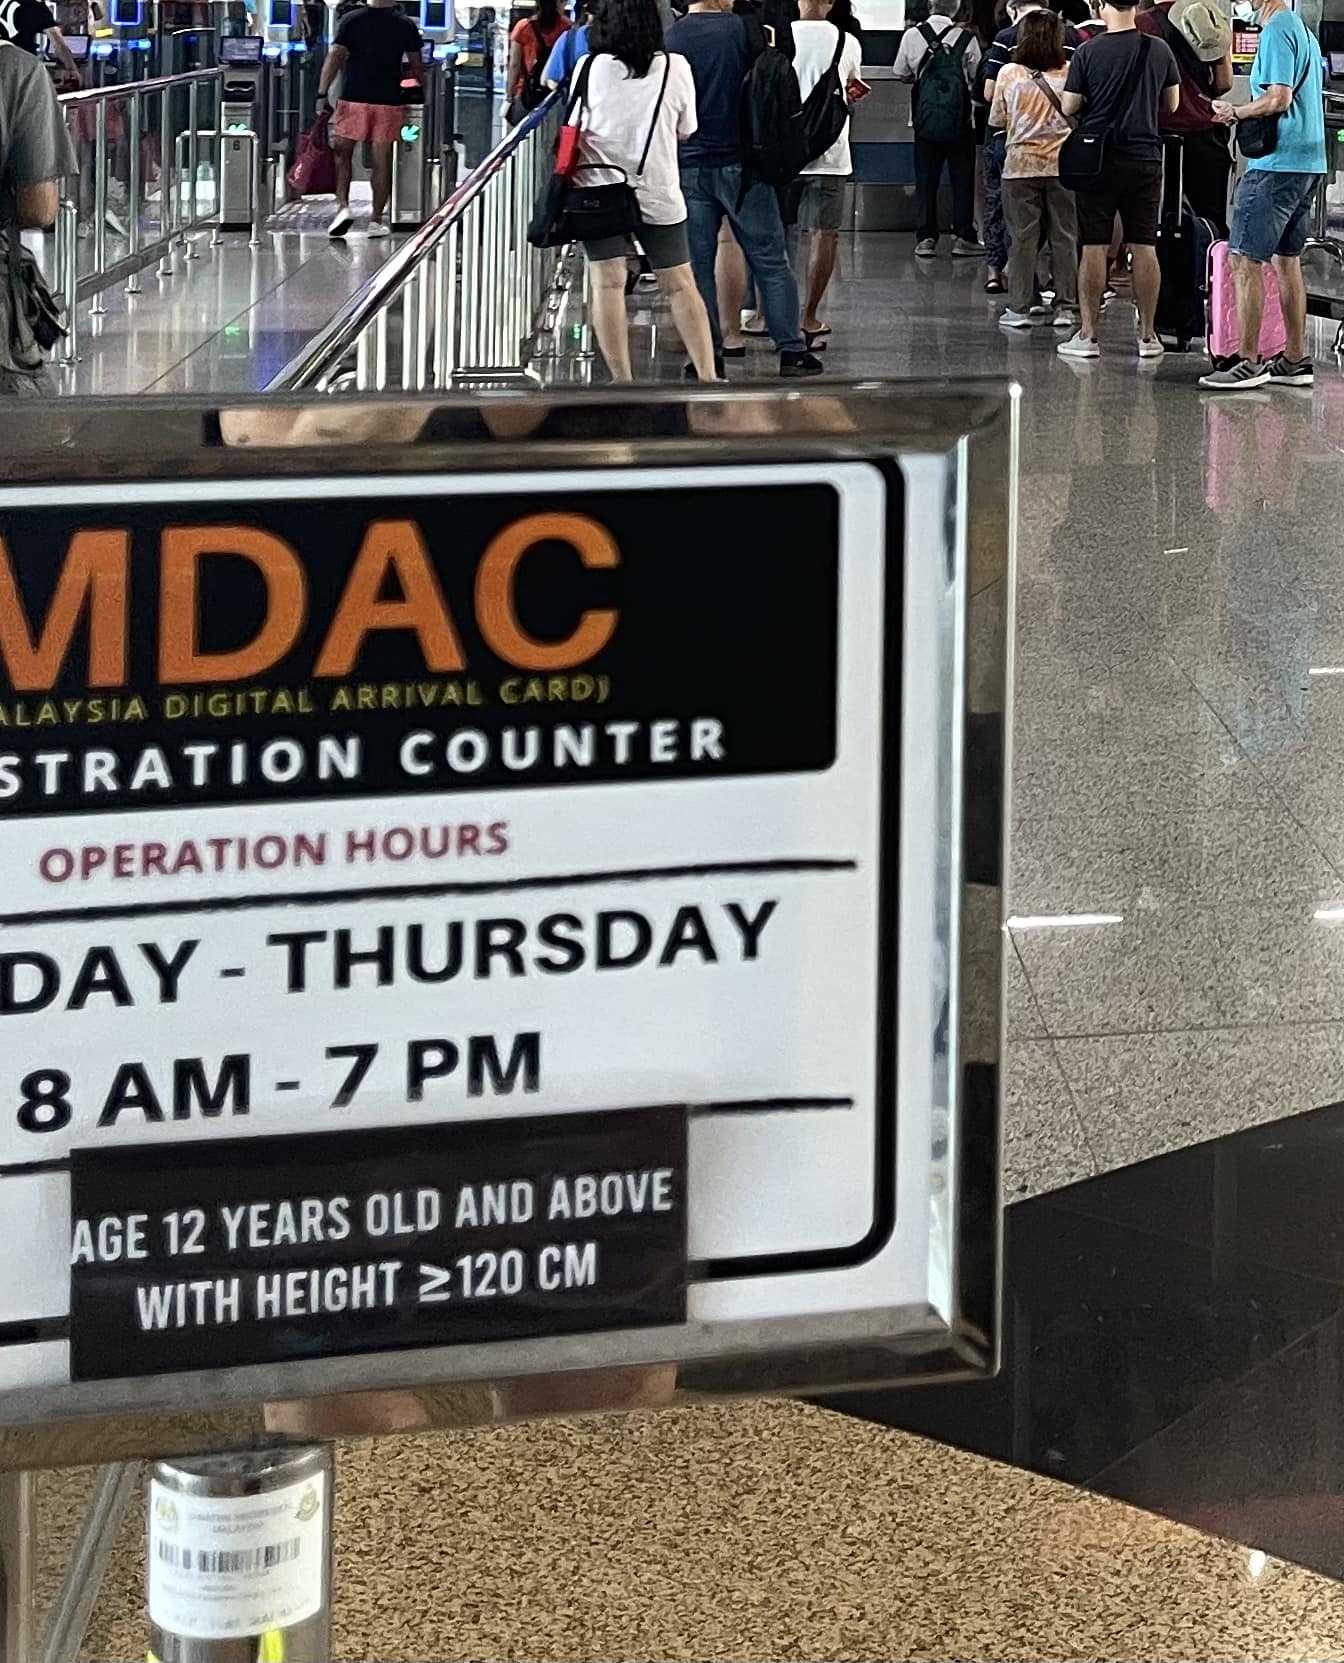 mdac-registration-counter.jpg